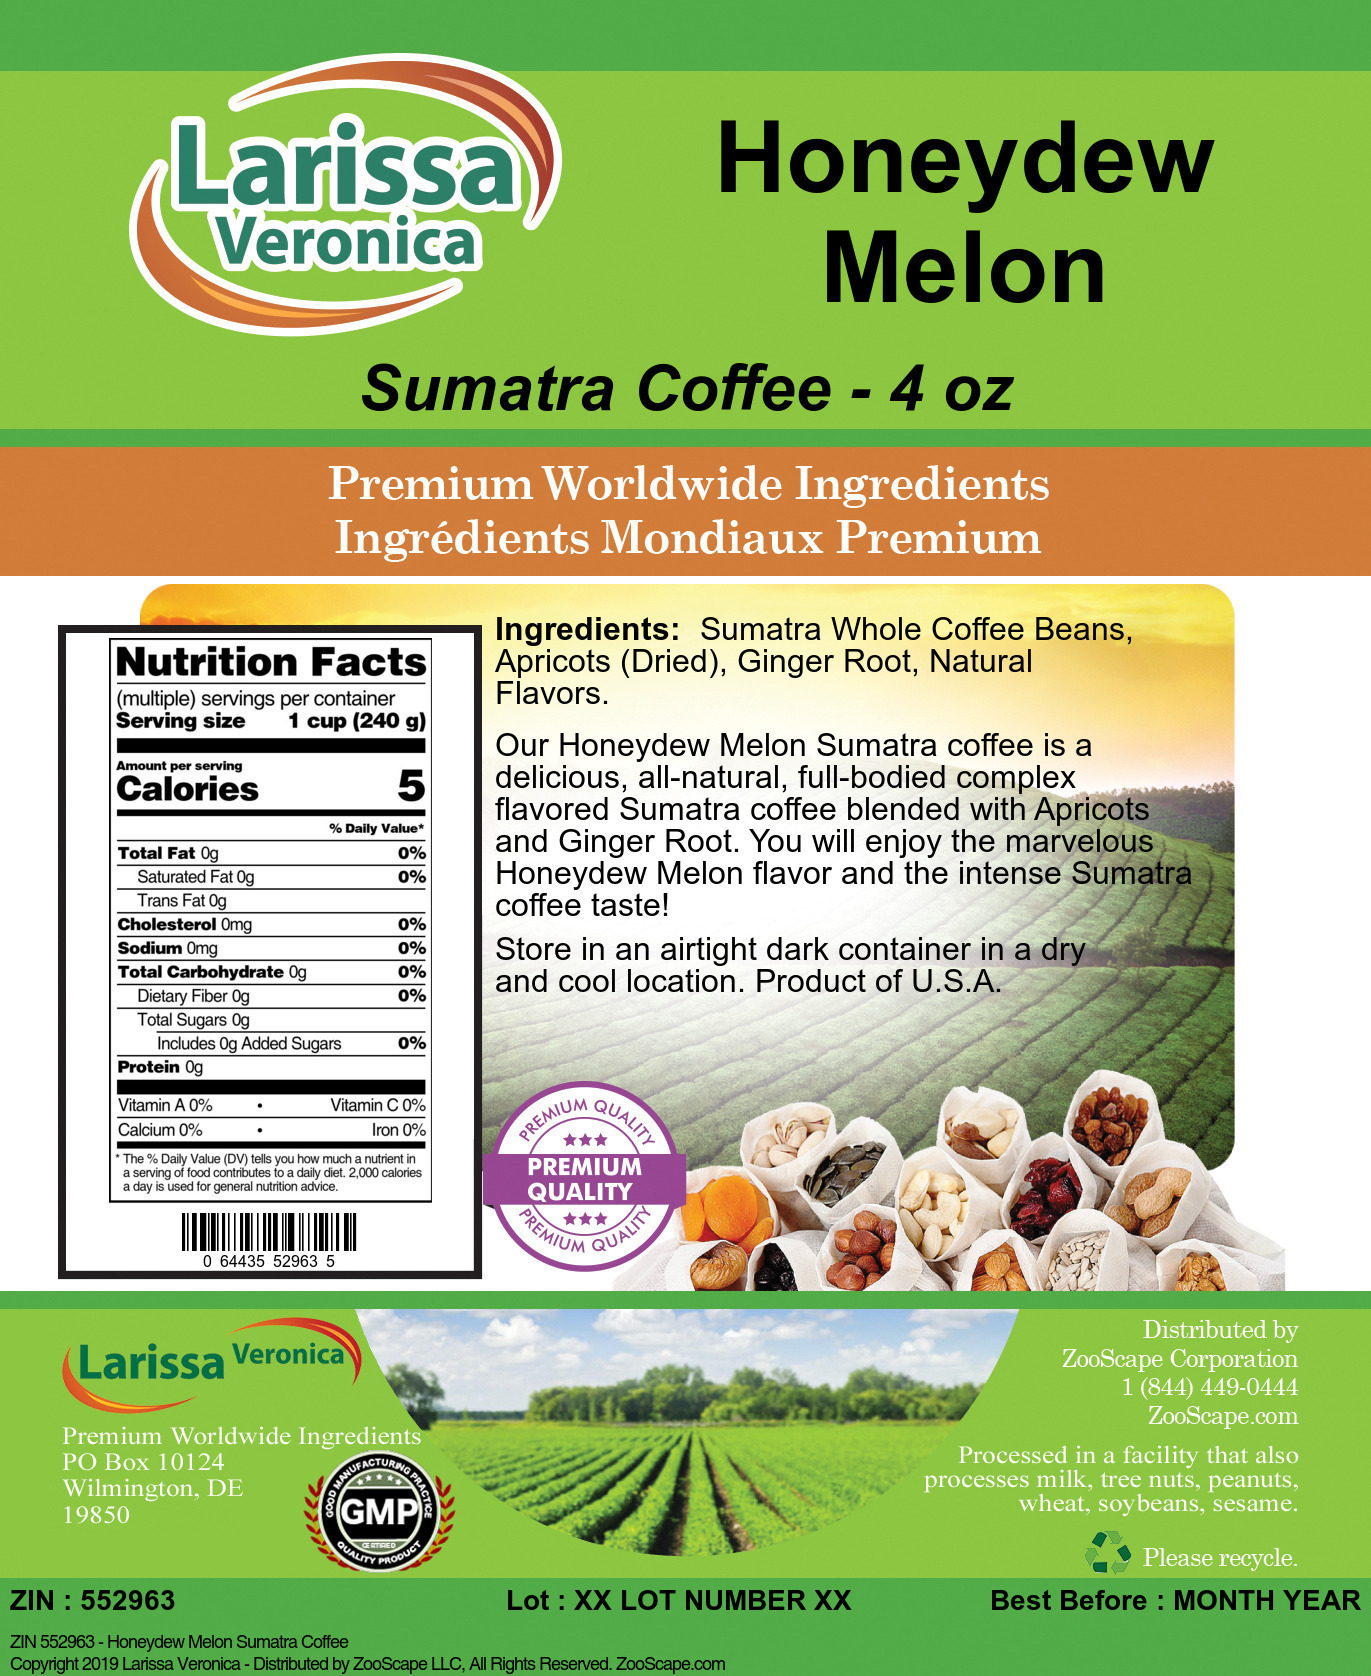 Honeydew Melon Sumatra Coffee - Label